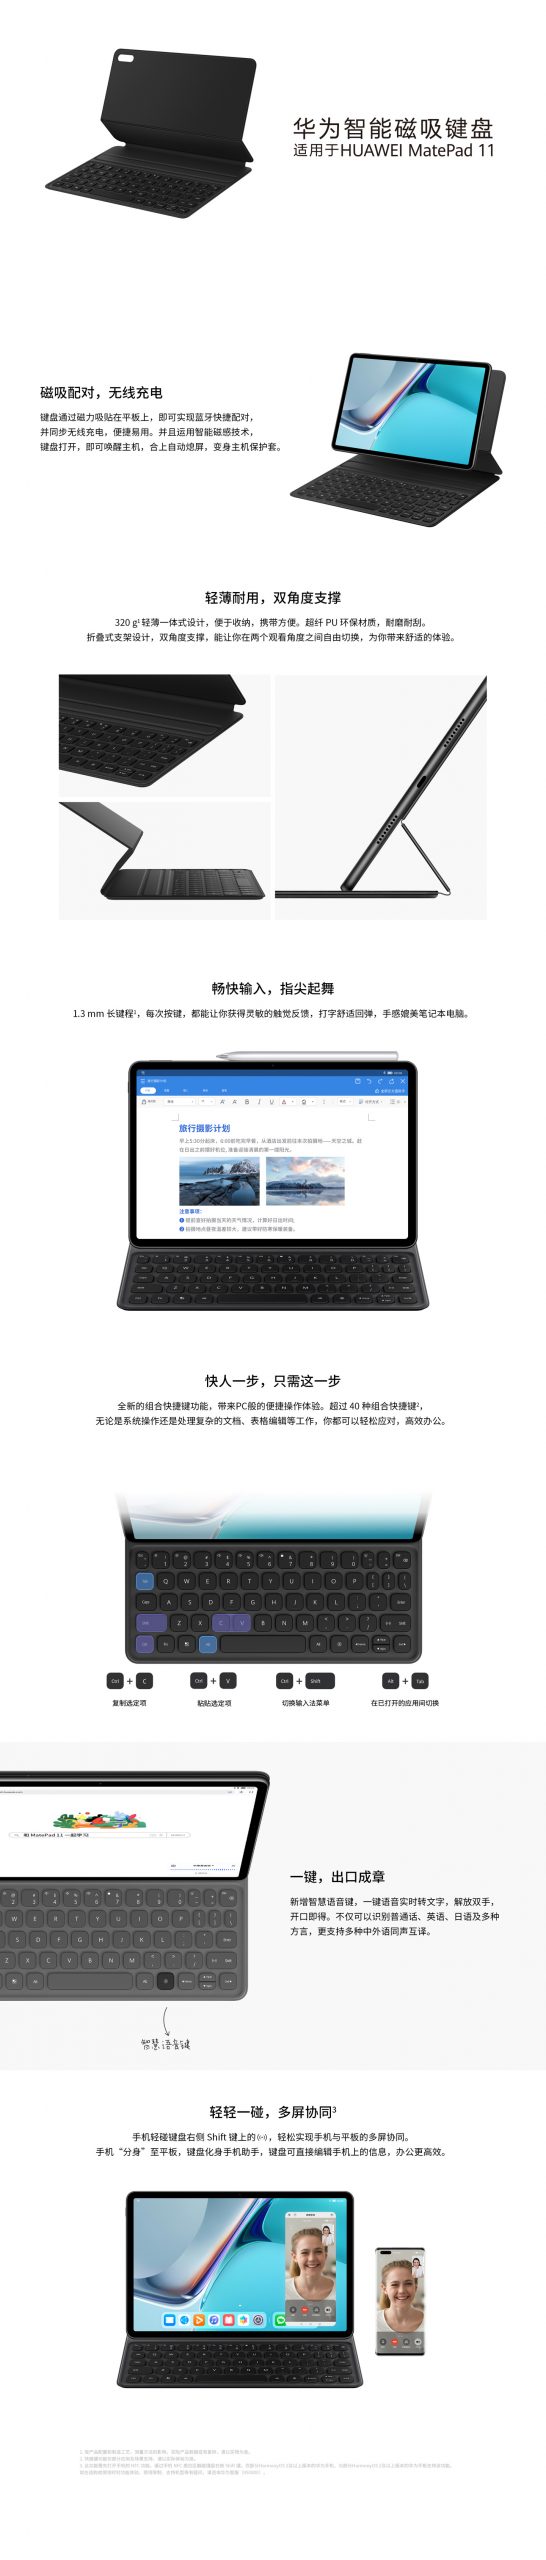 Huawei MatePad 11 smart magnetic keyboard